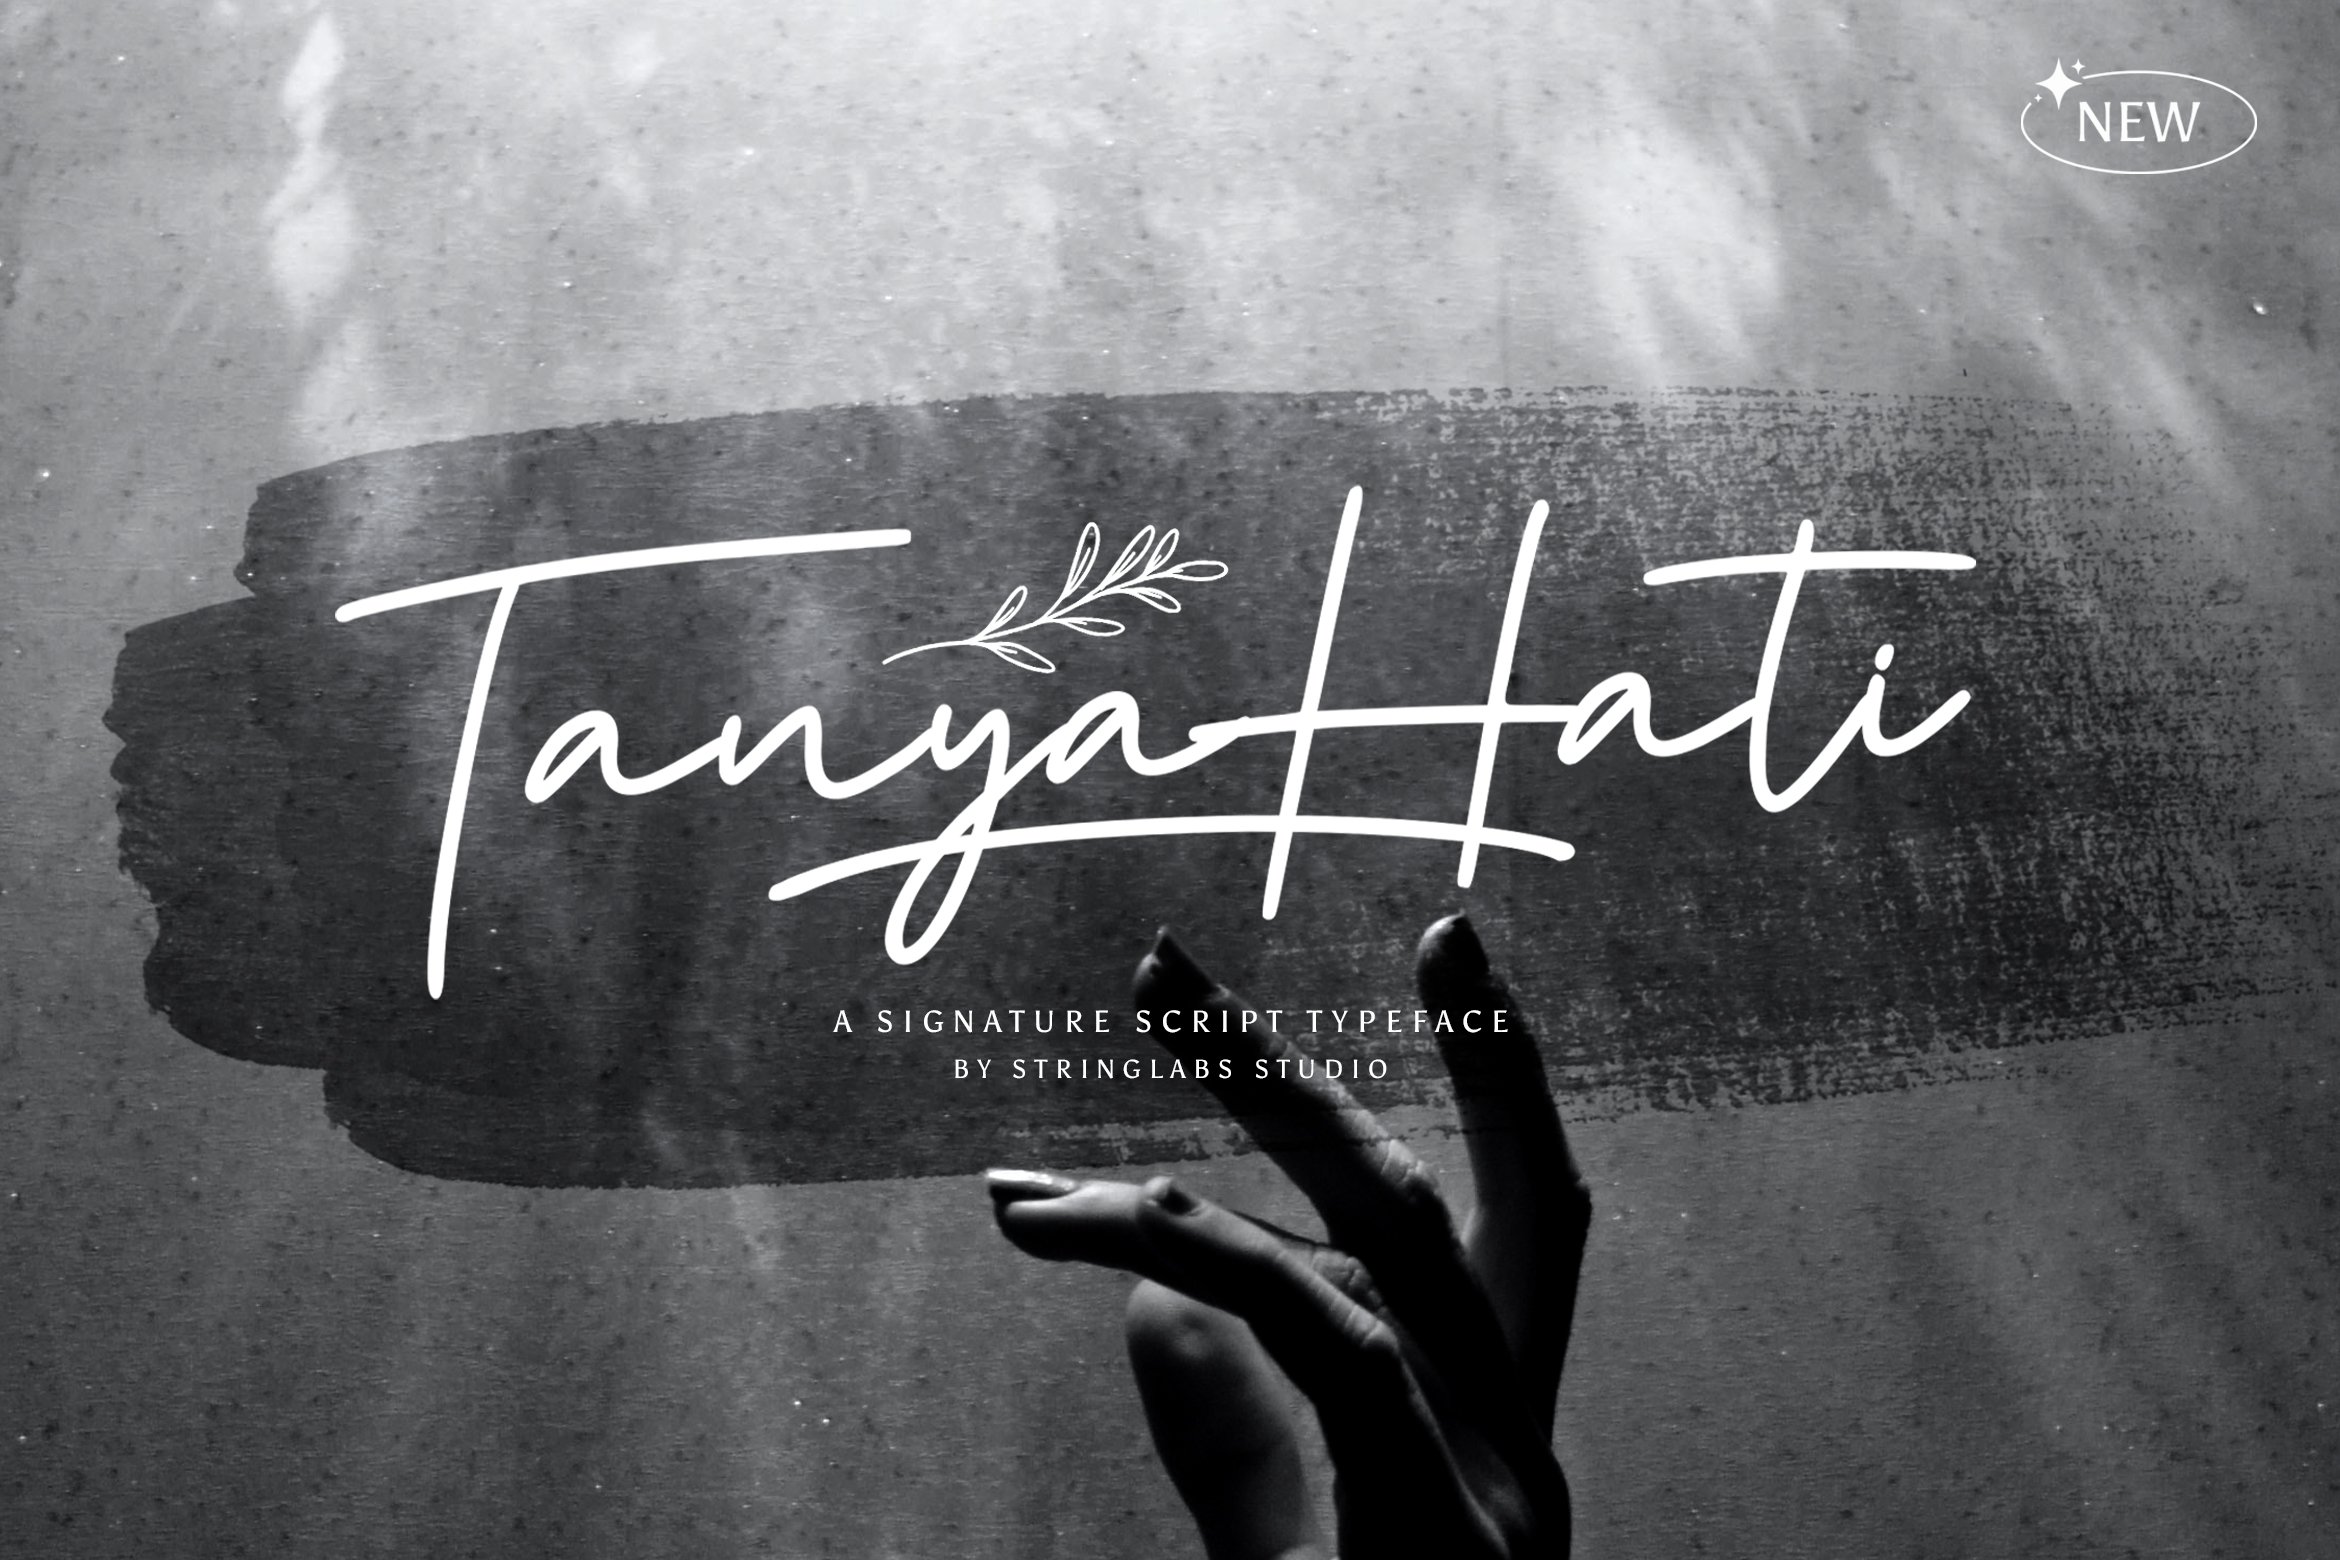 Tanya Hati - Signature Script Font cover image.